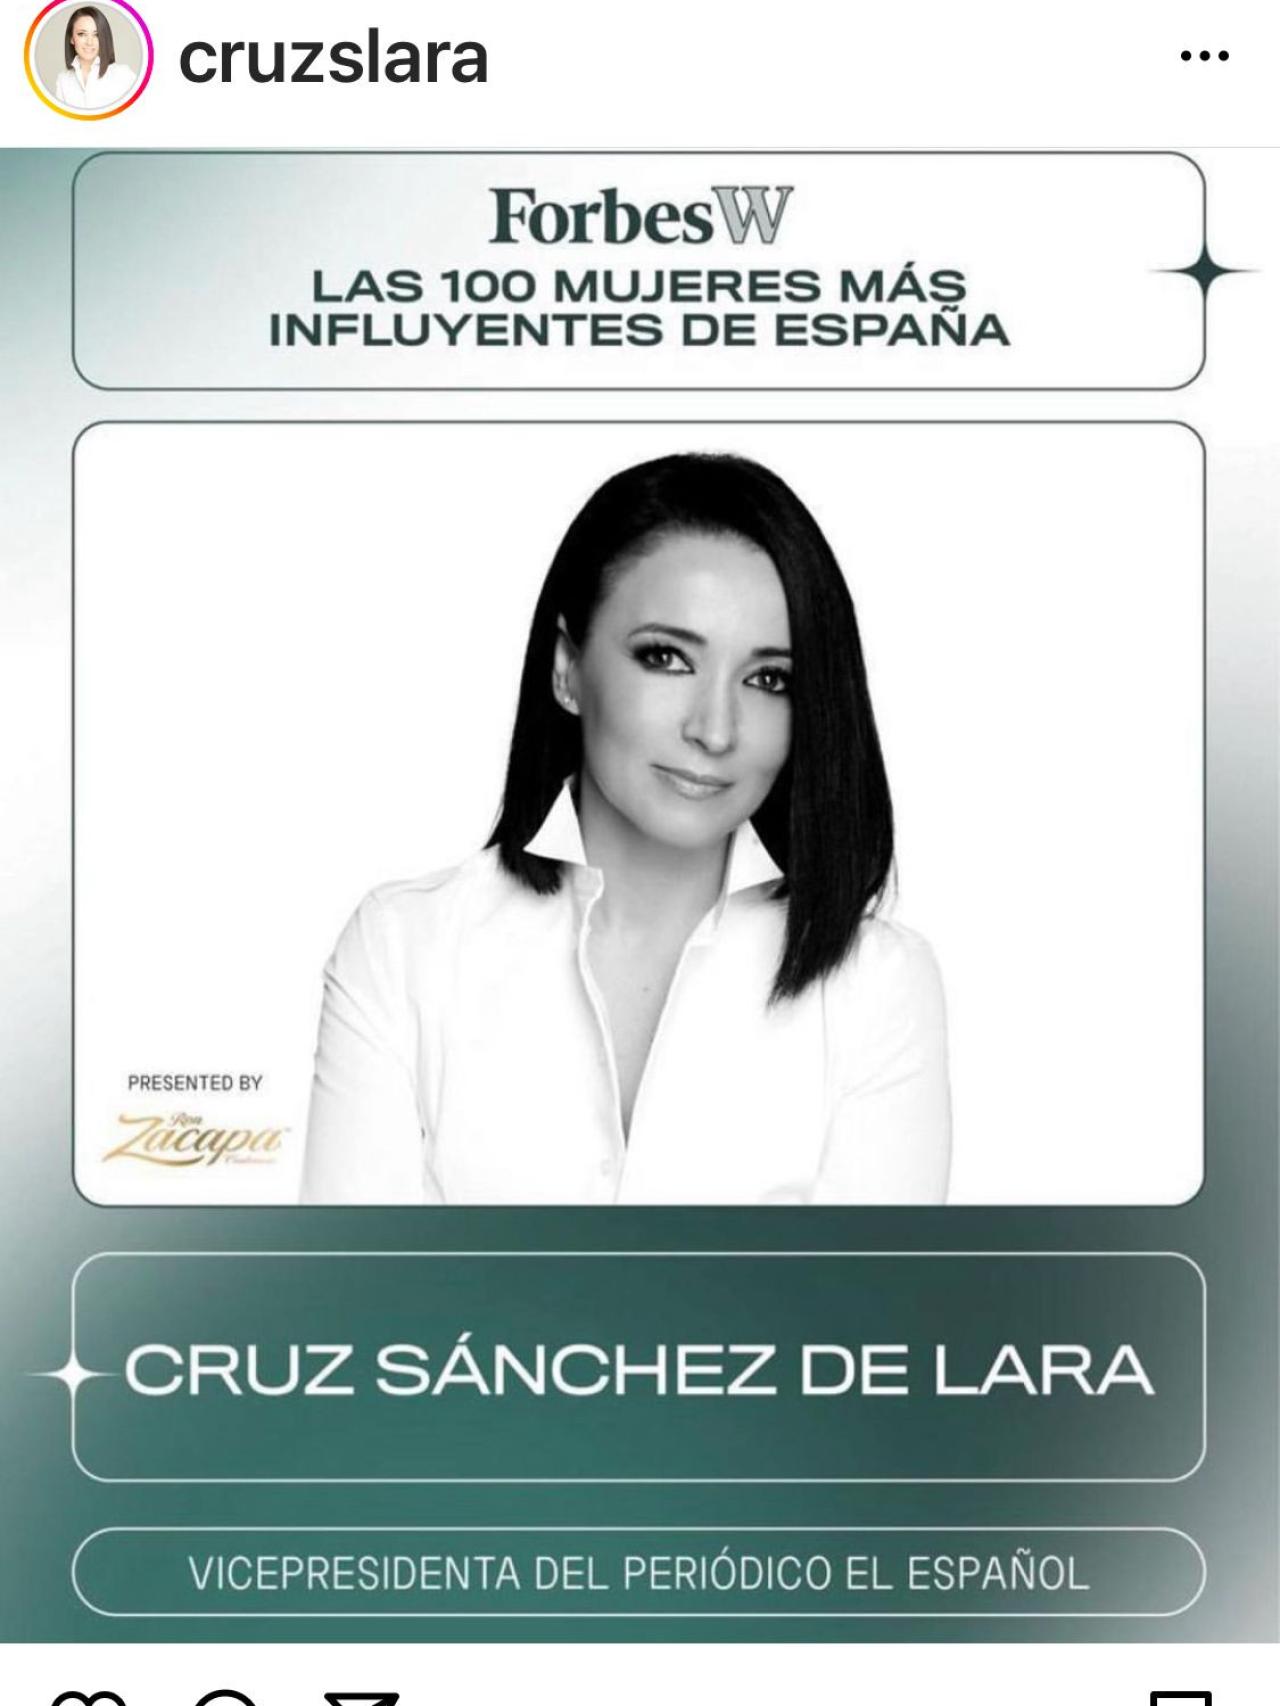 Cruz Sánchez de Lara, Top 100